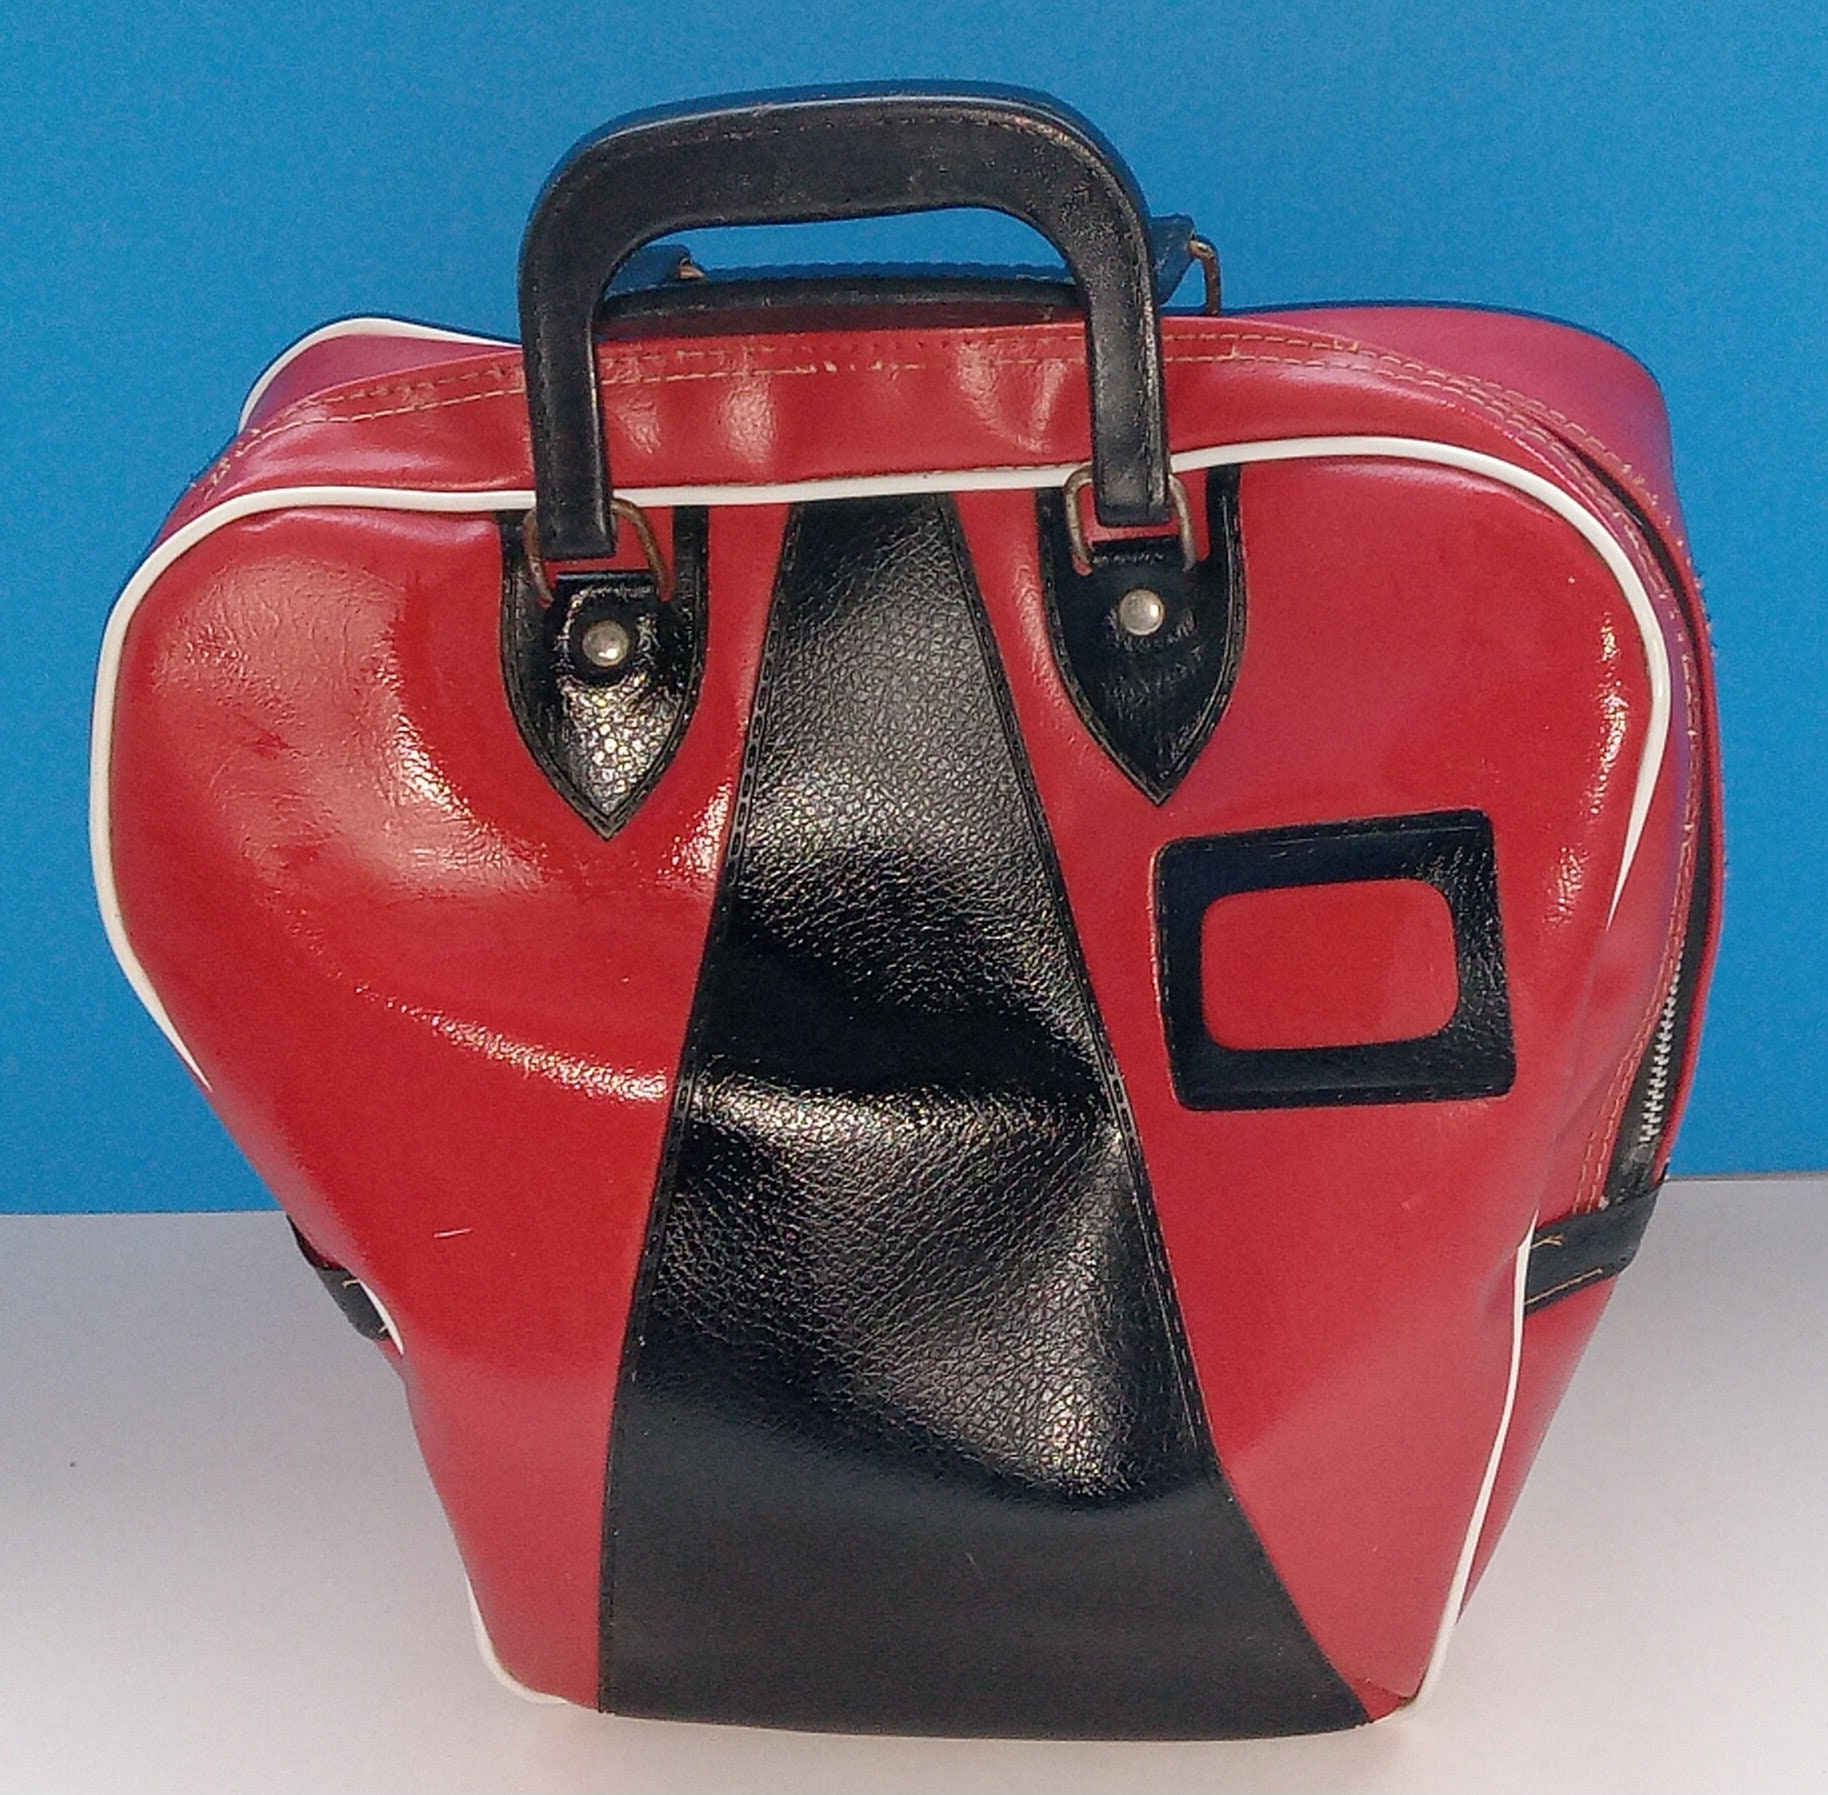 Vintage Red/Black Faux Leather Bowling Bag, Retro 1970s Bowling Ball Bag.